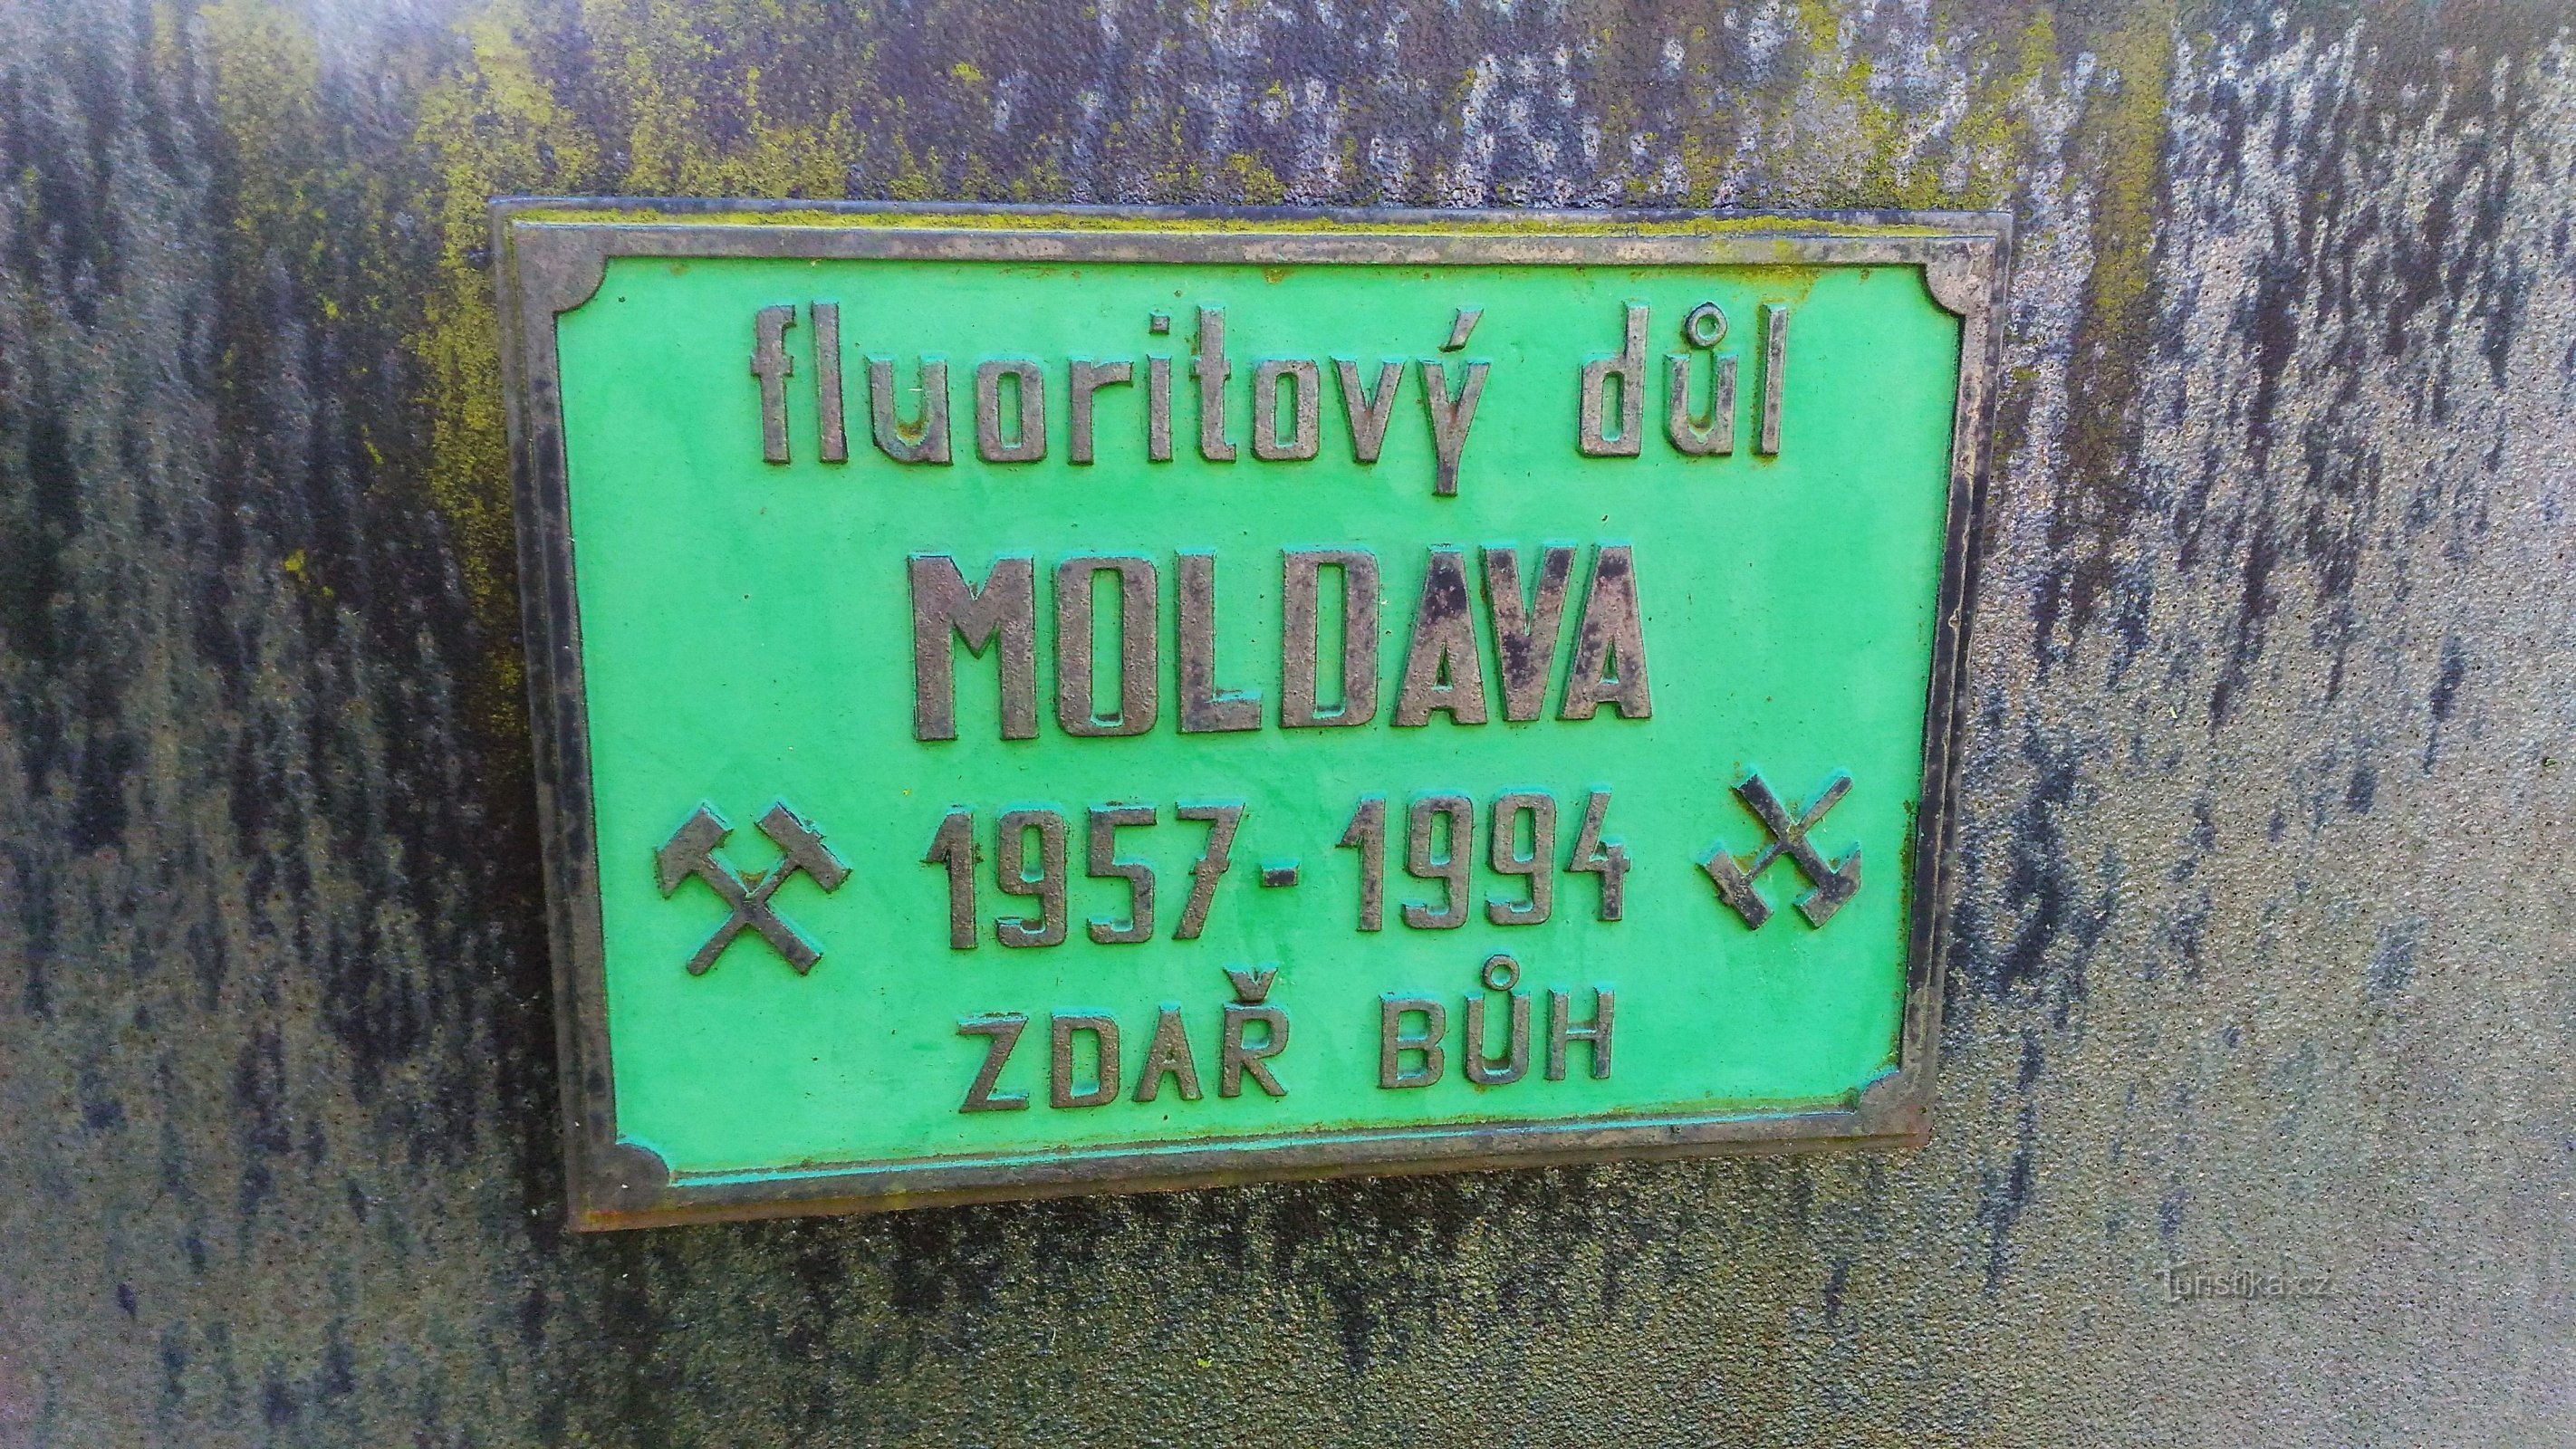 Monument to fluorite mining in Moldavia